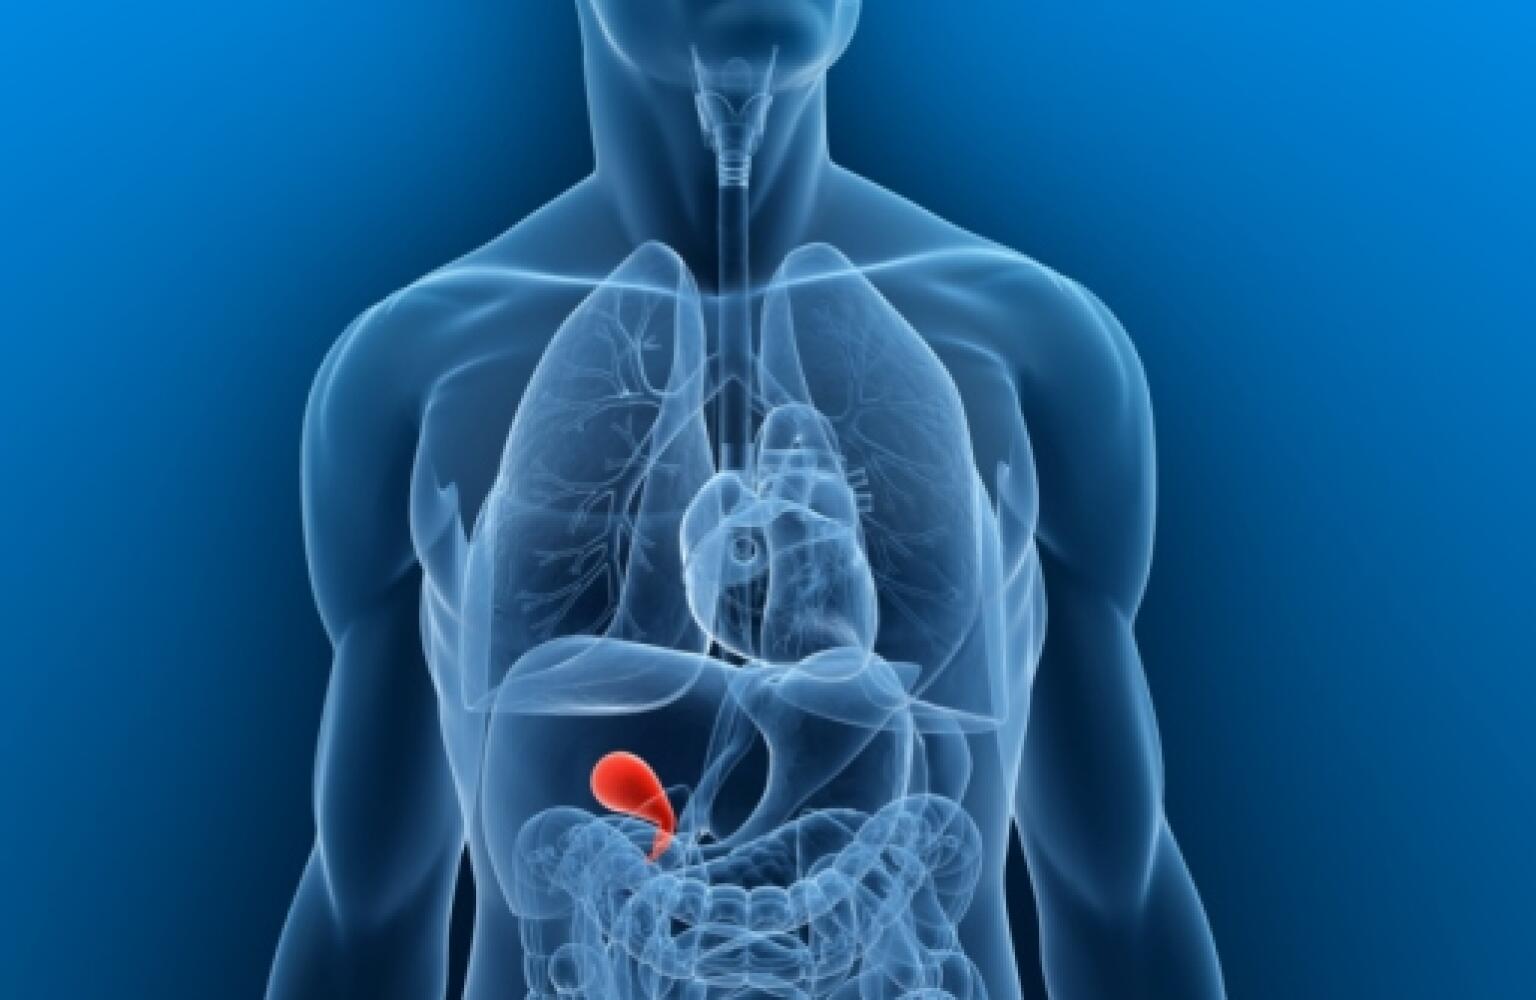 symptoms of gallbladder issues